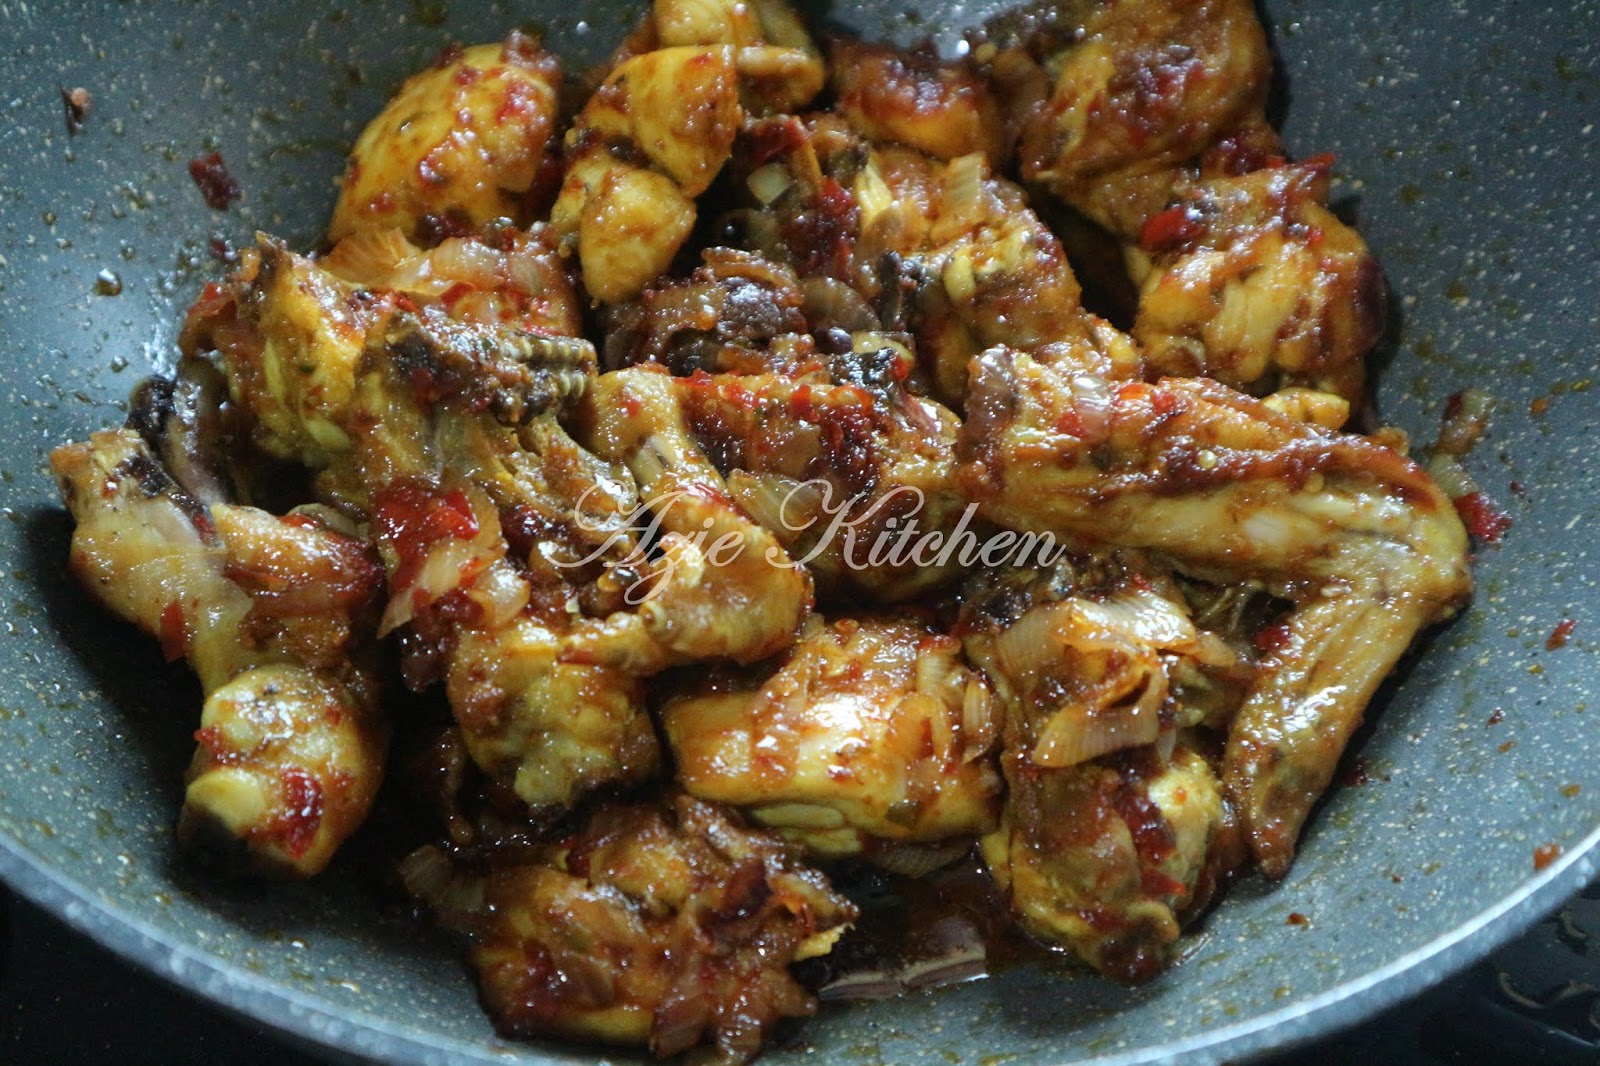 Resepi Ayam Masak Merah Azie Kitchen - 8 Descargar